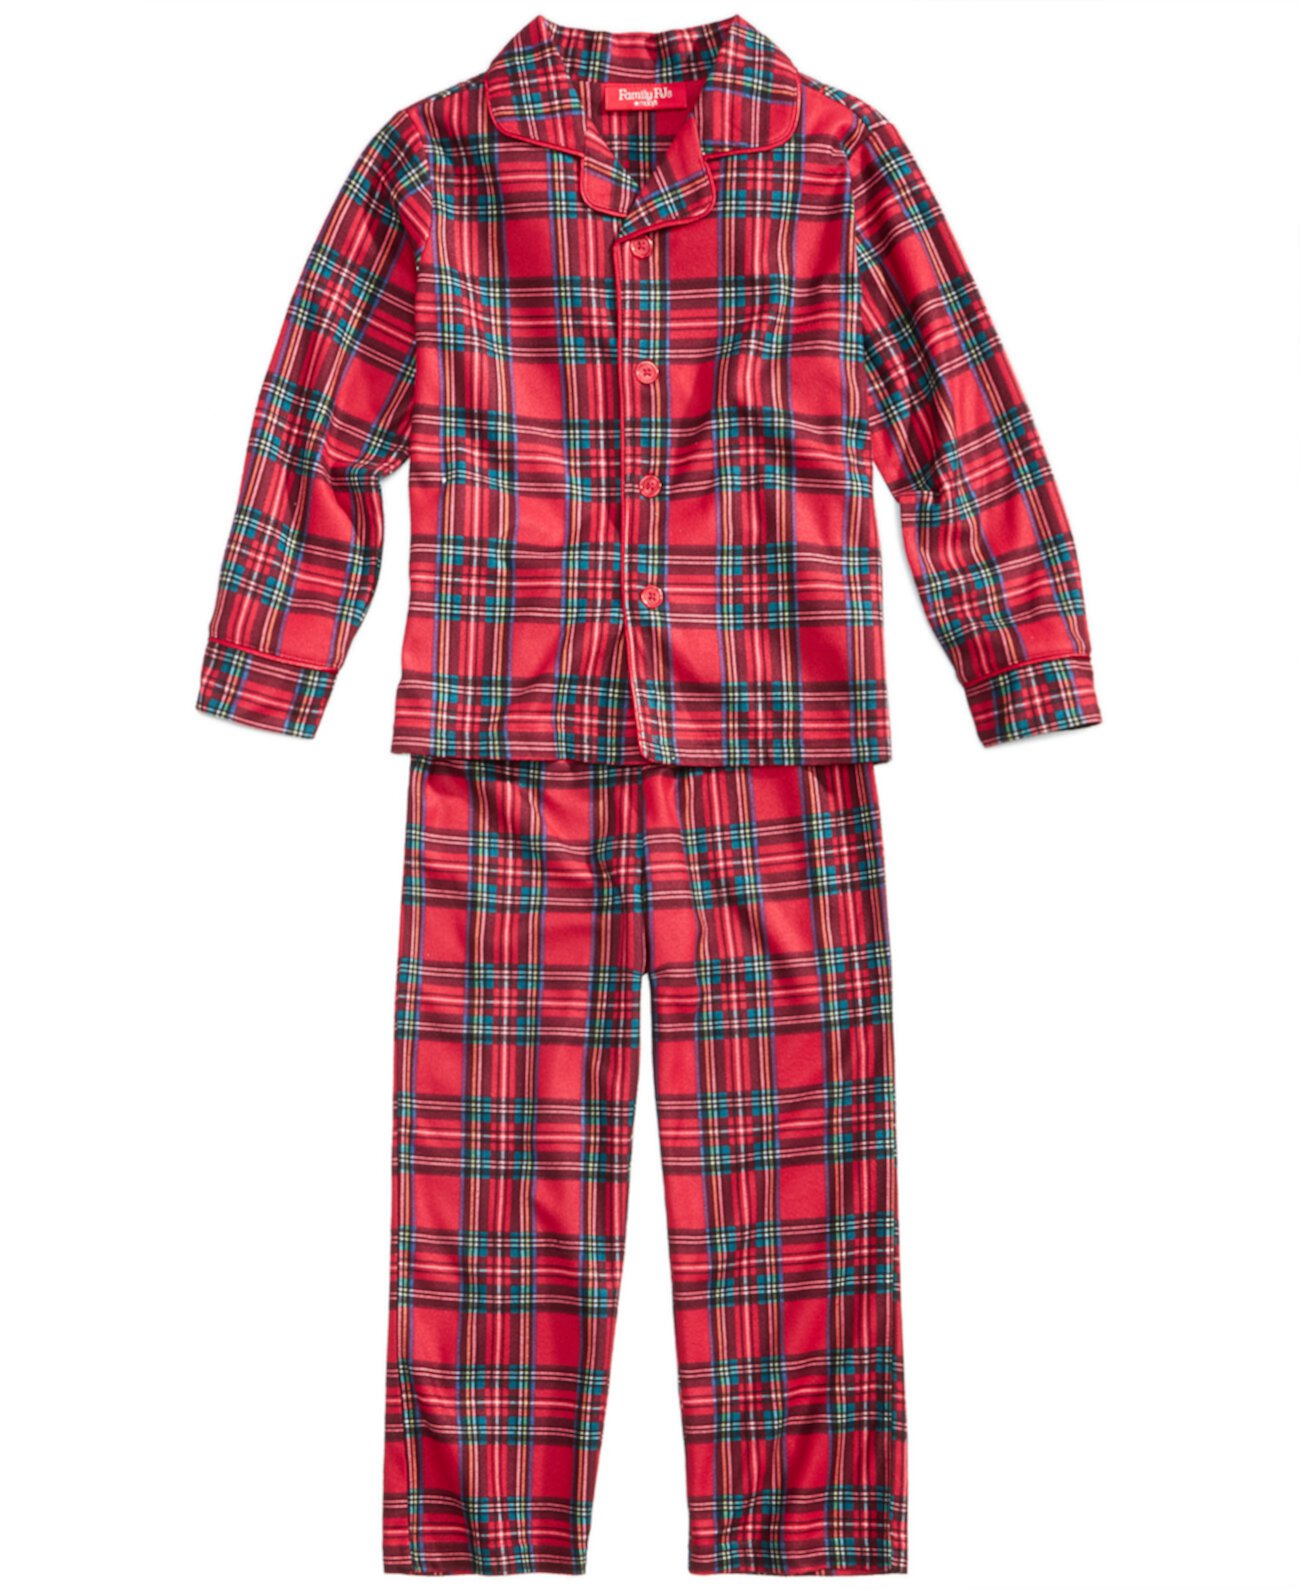 Matching Kids Brinkley Plaid Pyjama Set, созданный для Macy's Family Pajamas